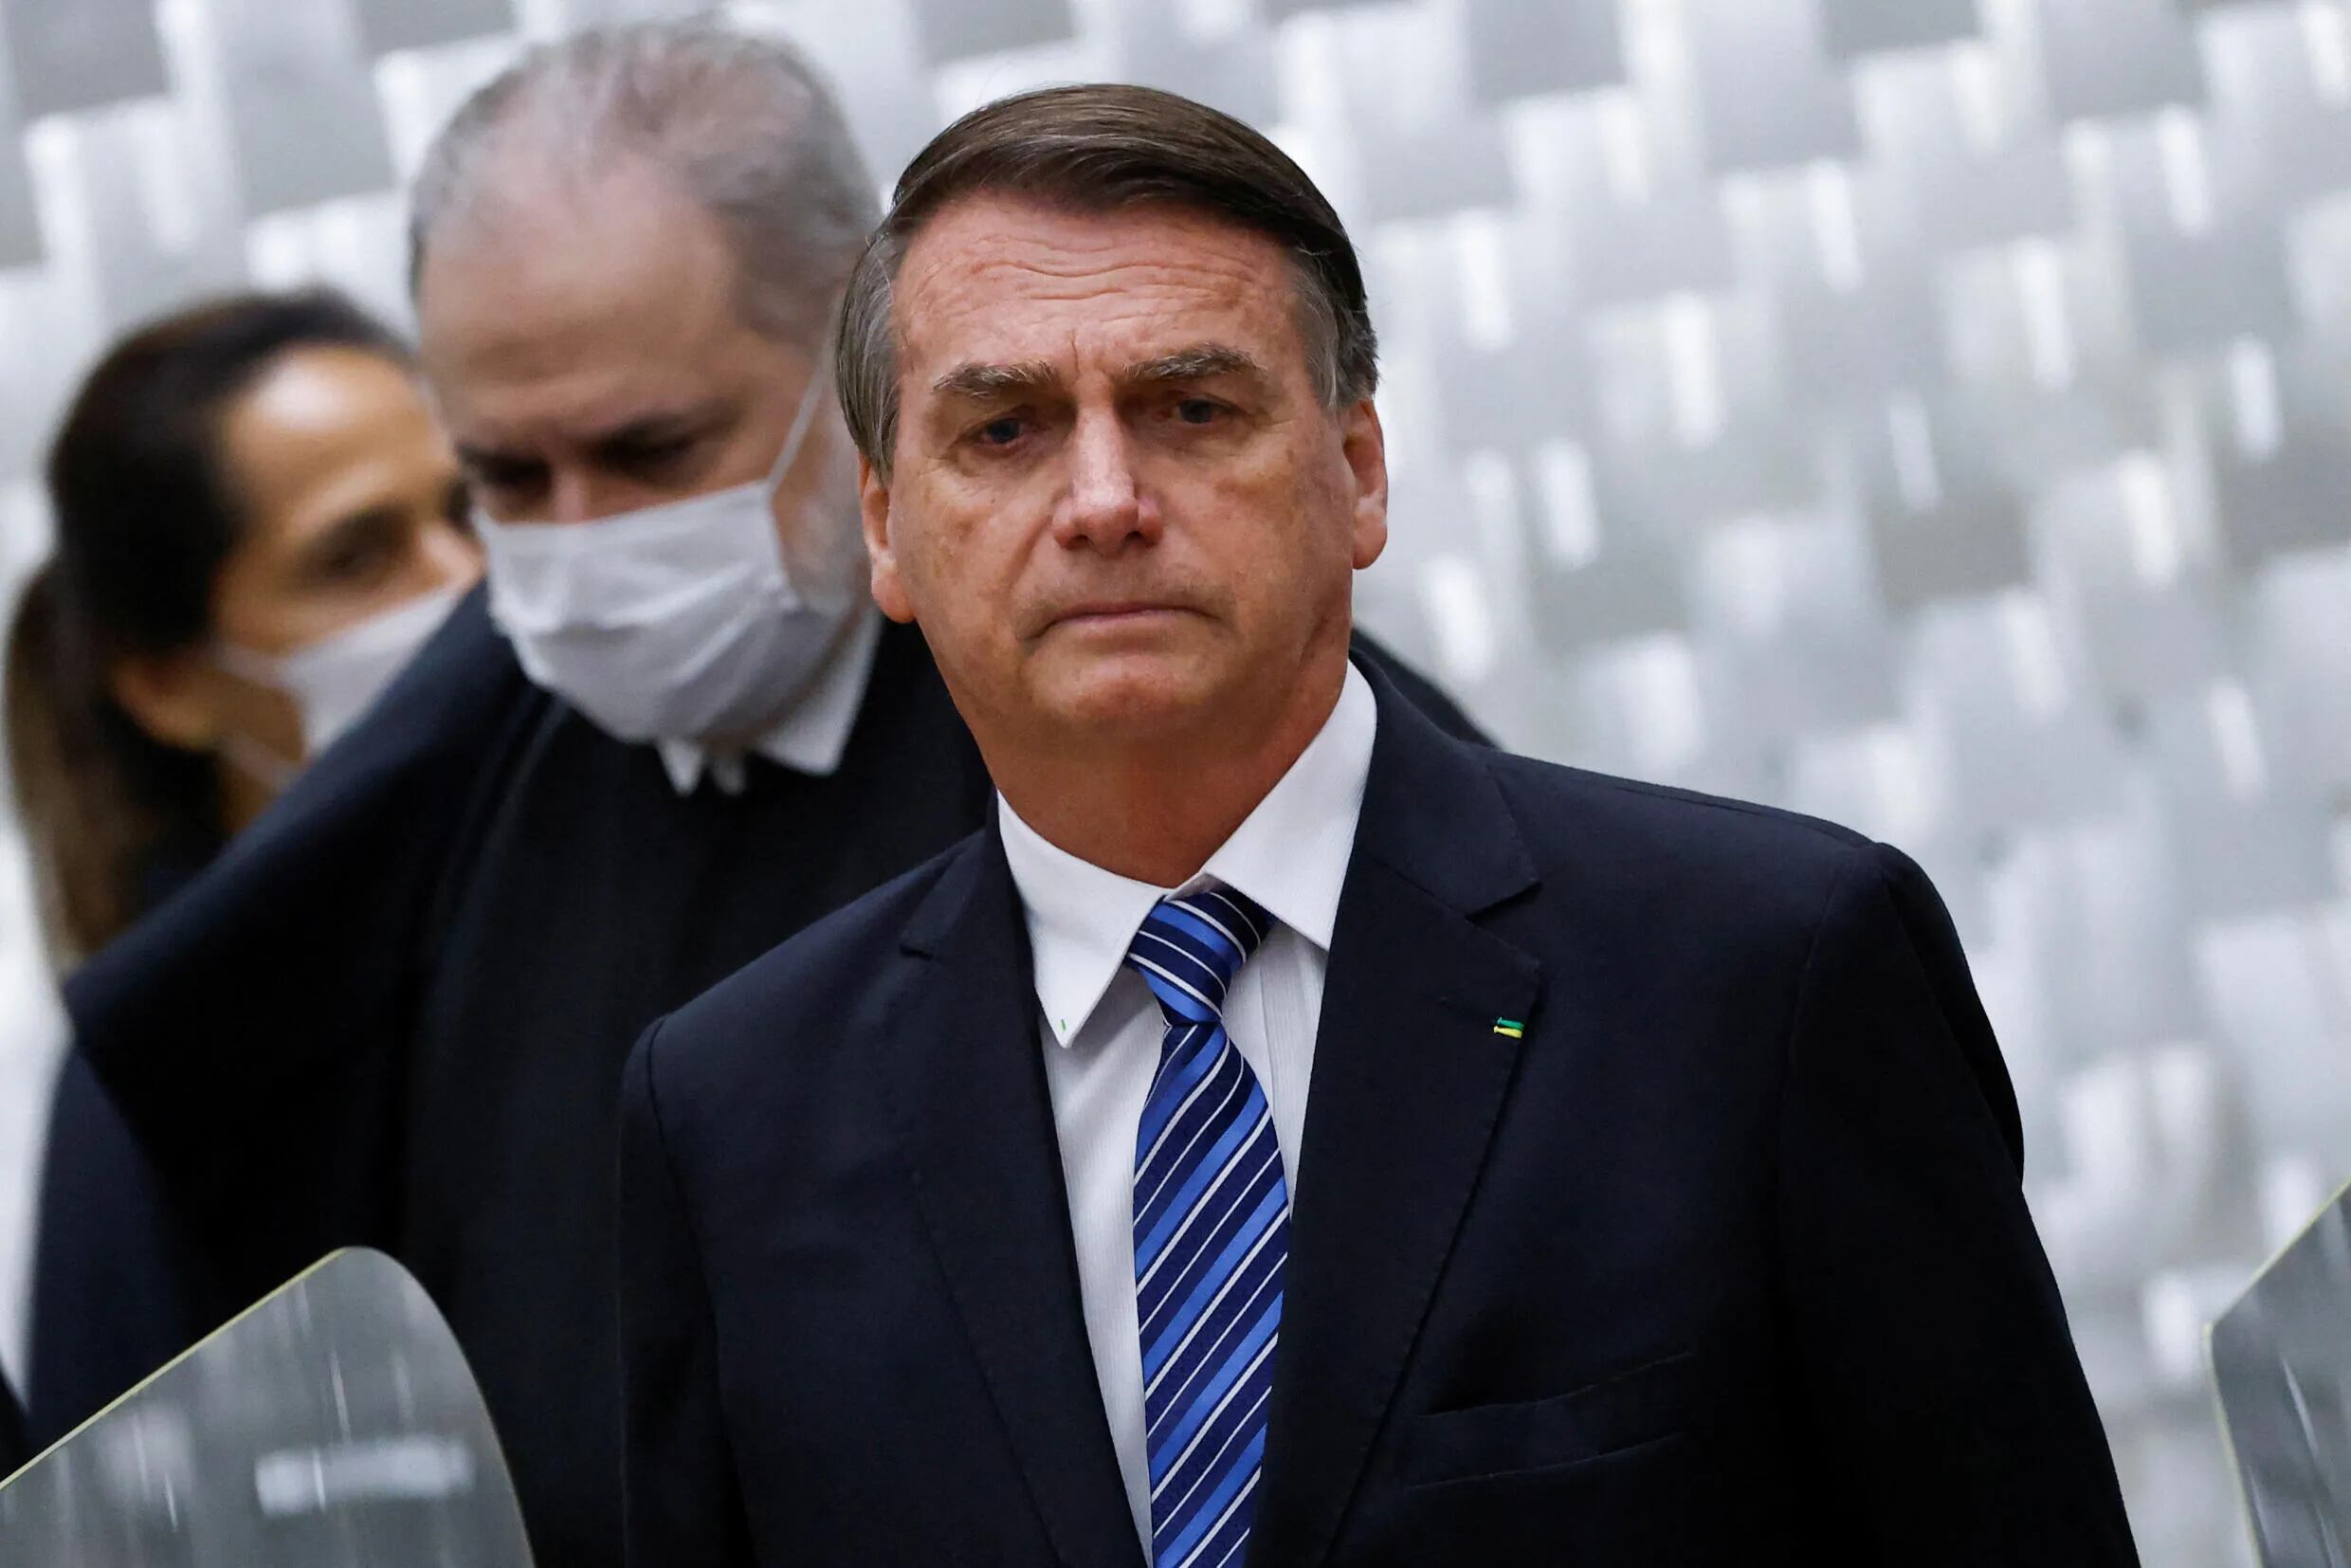 Investigarán a Bolsonaro por asalto a las sedes del poder público en Brasilia